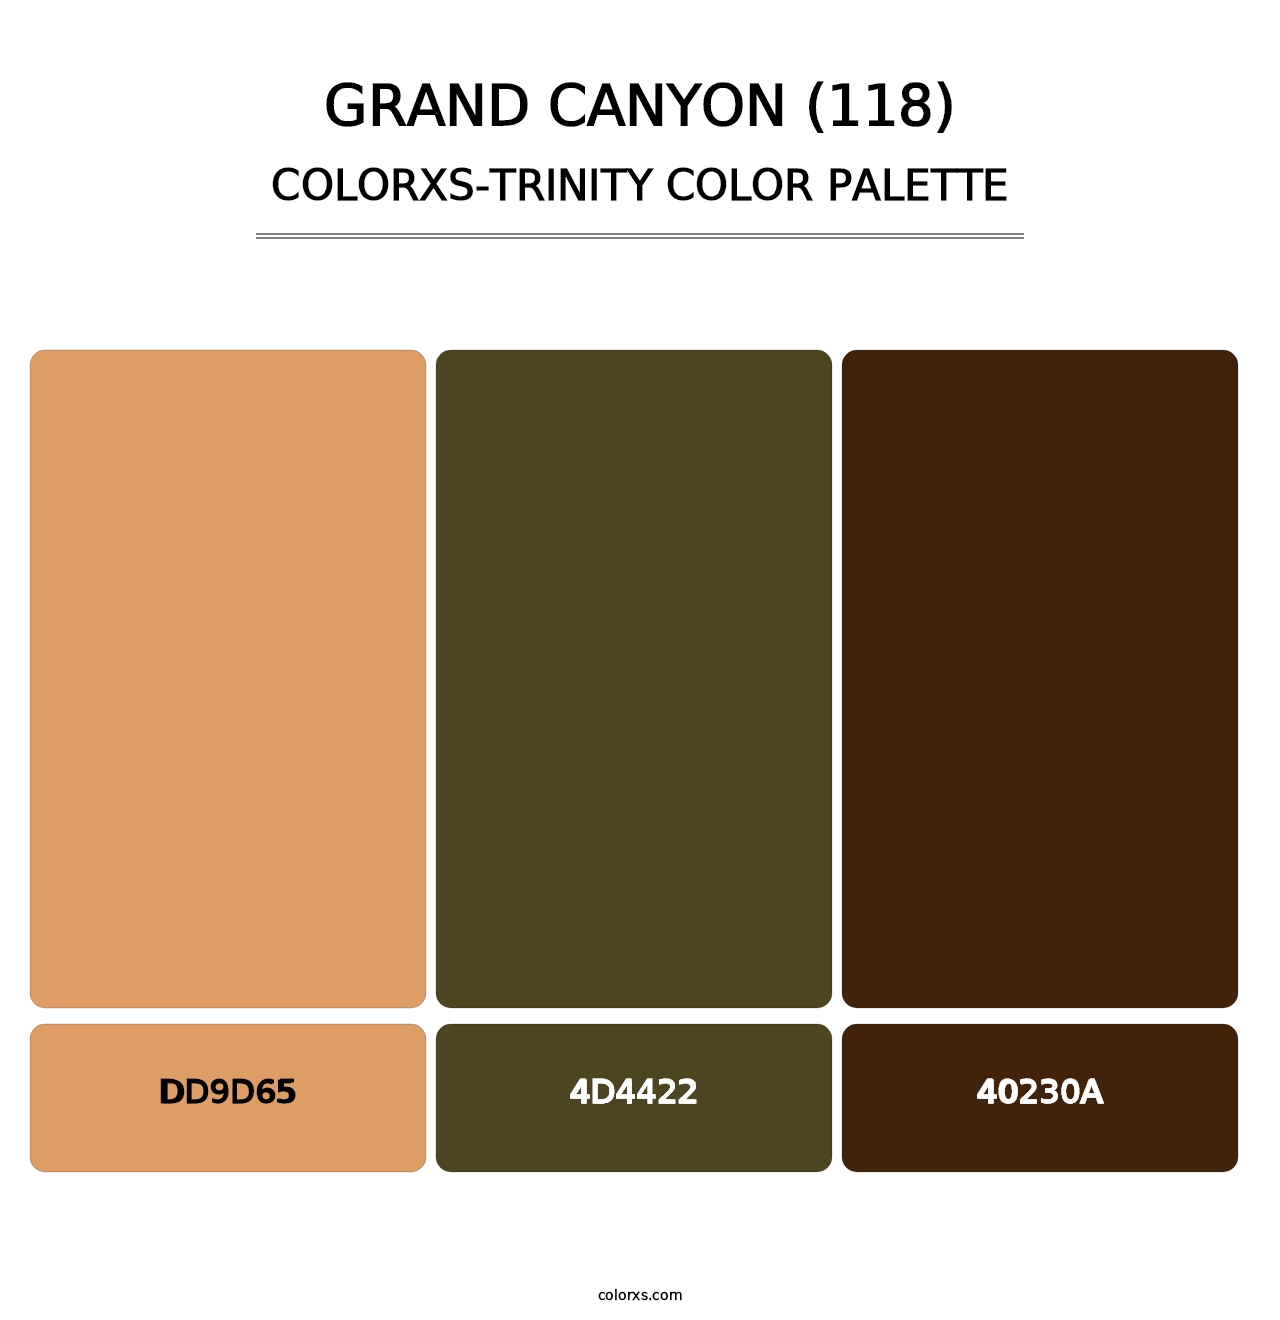 Grand Canyon (118) - Colorxs Trinity Palette